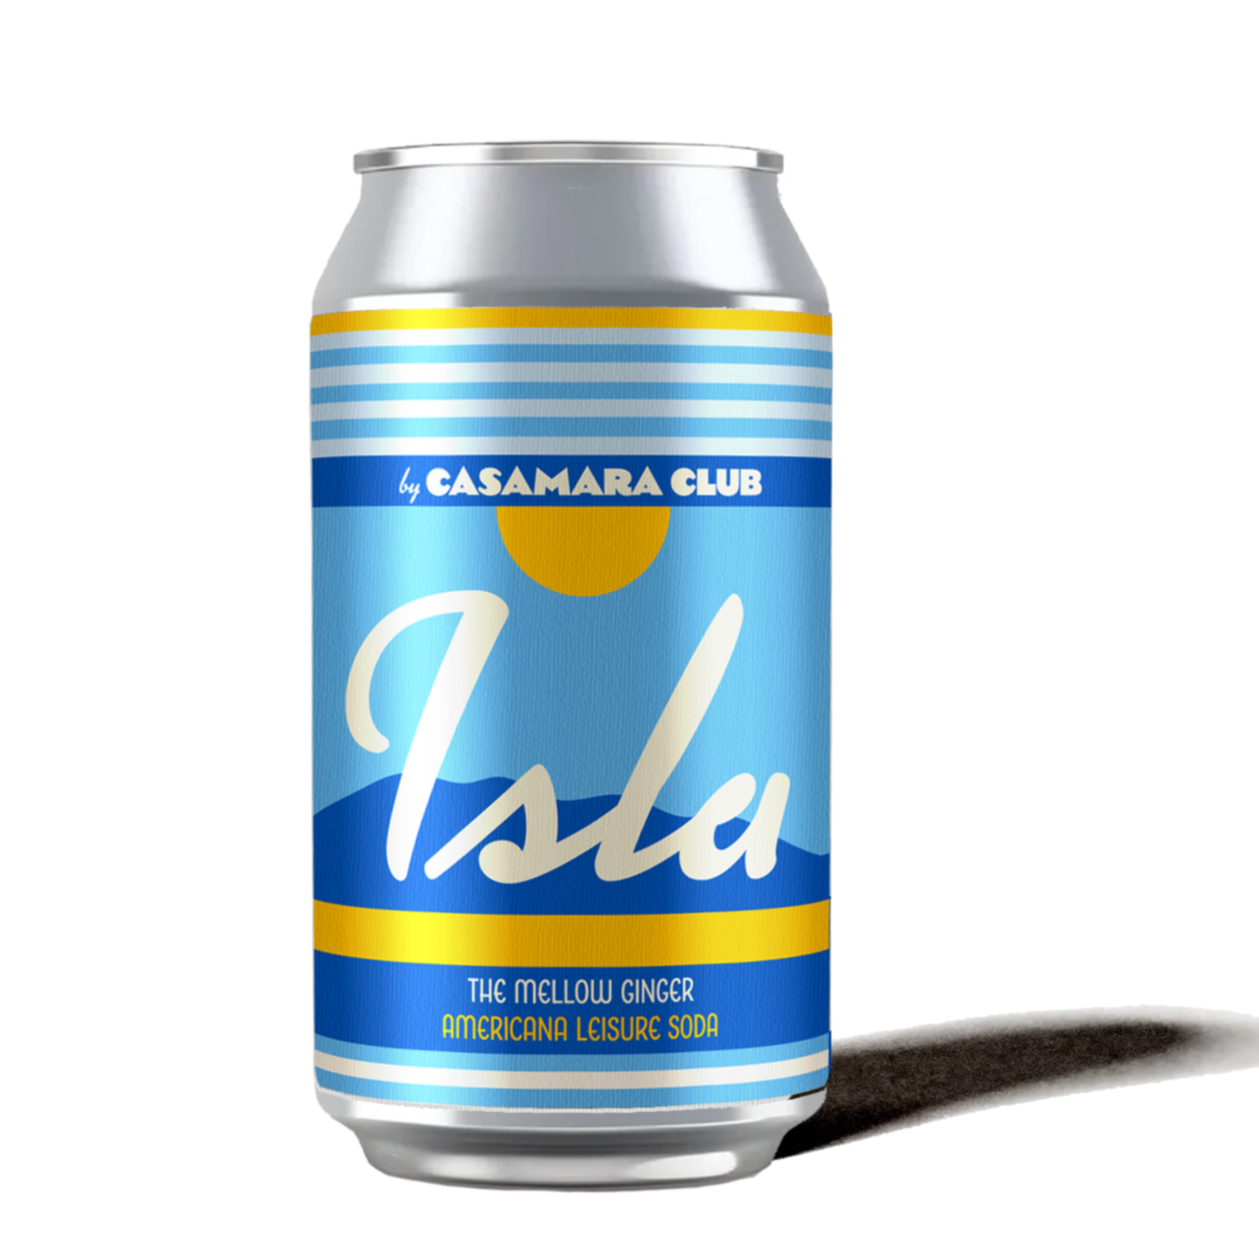 Casamara Club 'Isla' Leisure Soda (Non-Alcoholic), Detroit [12oz Cans]